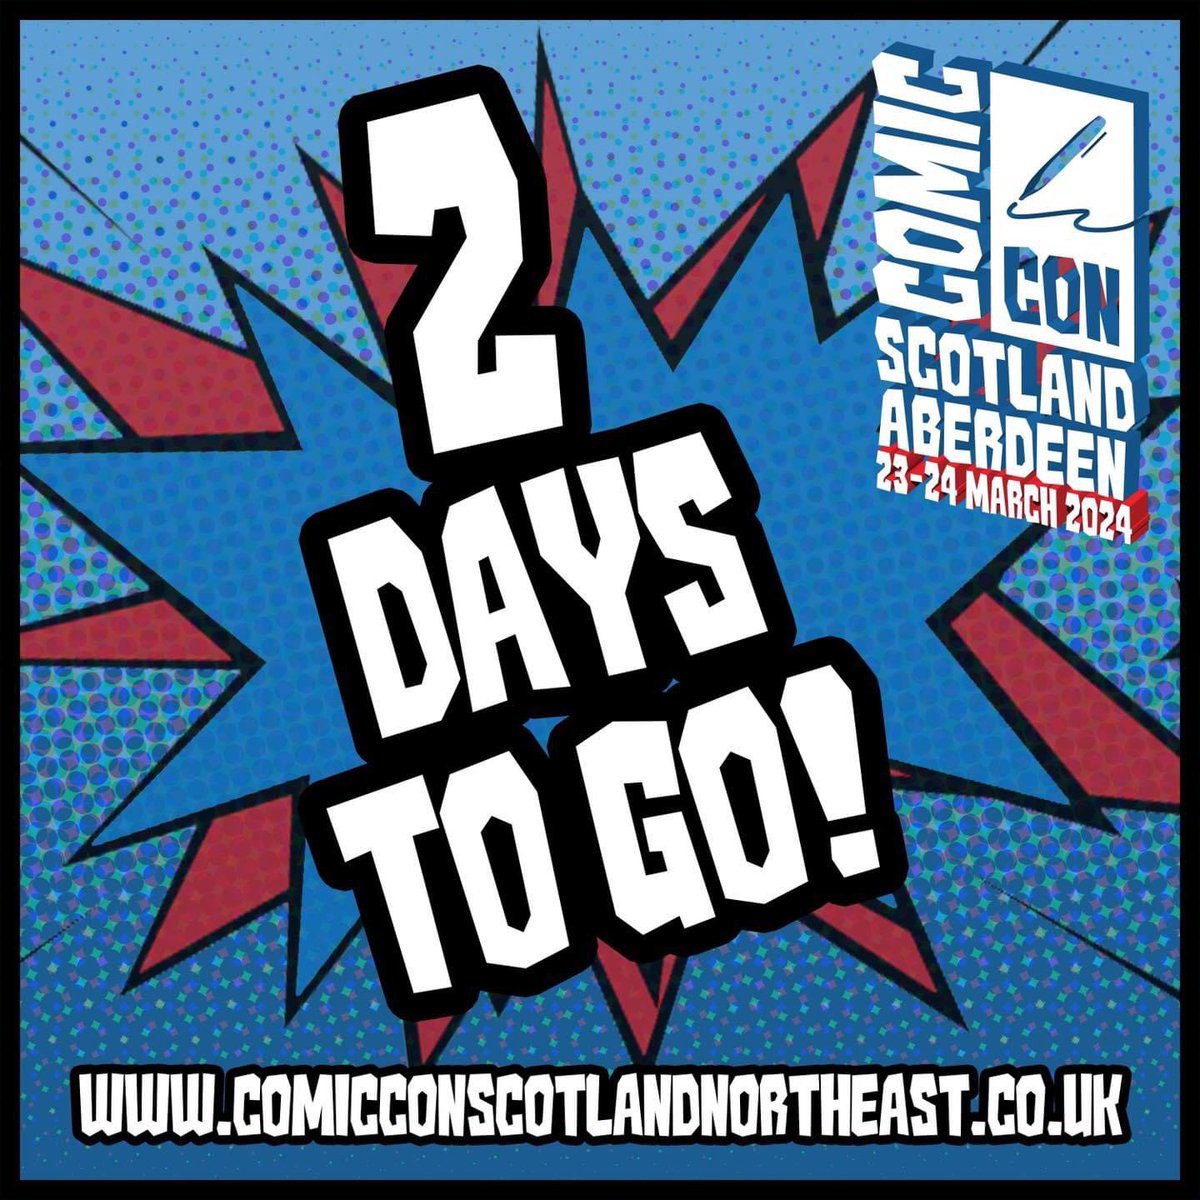 Comic Con Scotland Aberdeen – This weekend! 5d-blog.com/comic-con-scot… @comconaberdeen @comconscotland @monopolyevents1 @PandJLive @karengillan